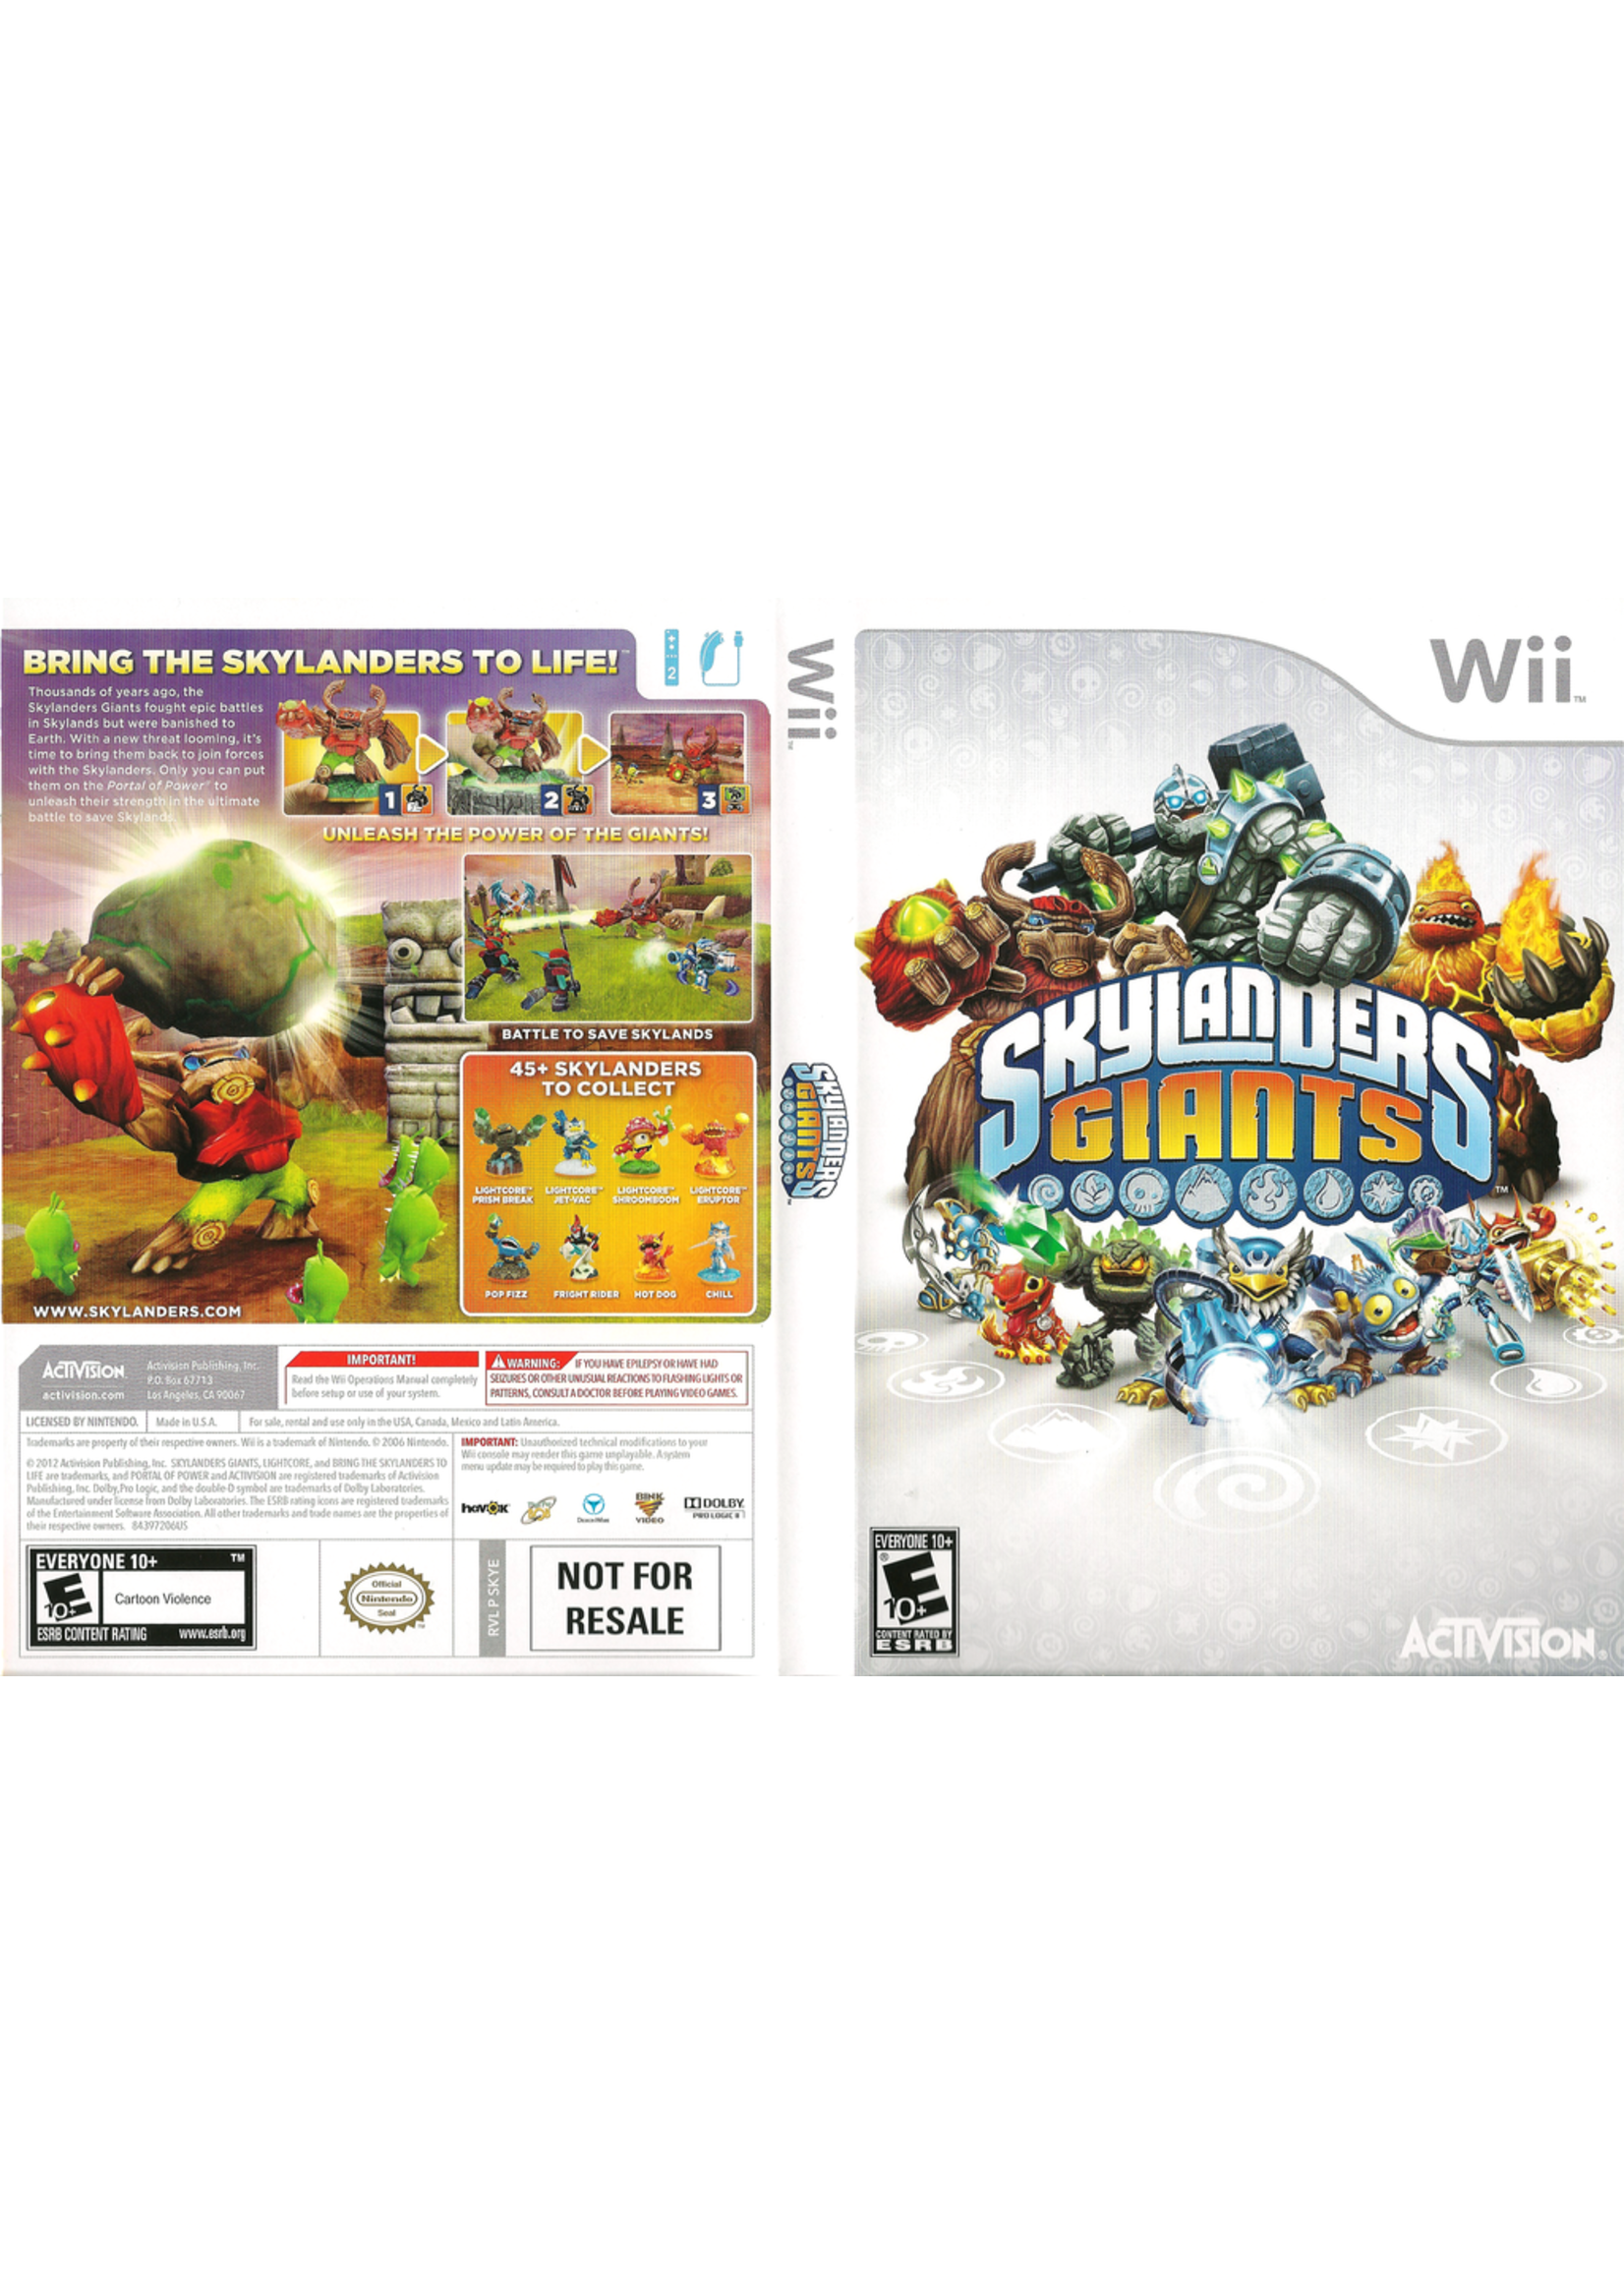 Nintendo Wii Skylanders Giants